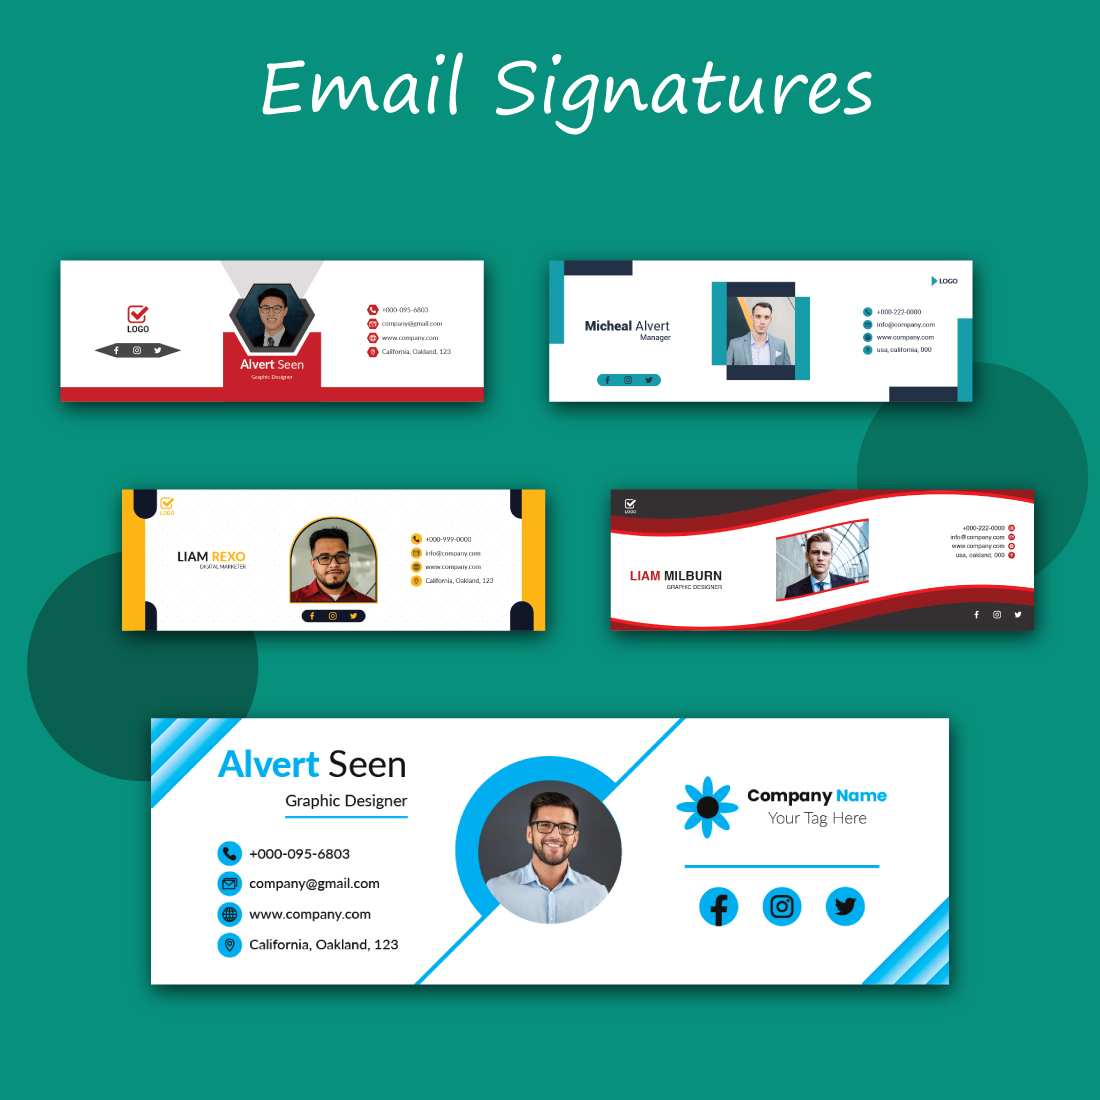 Stylish Email Signatures Bundle Pack cover image.